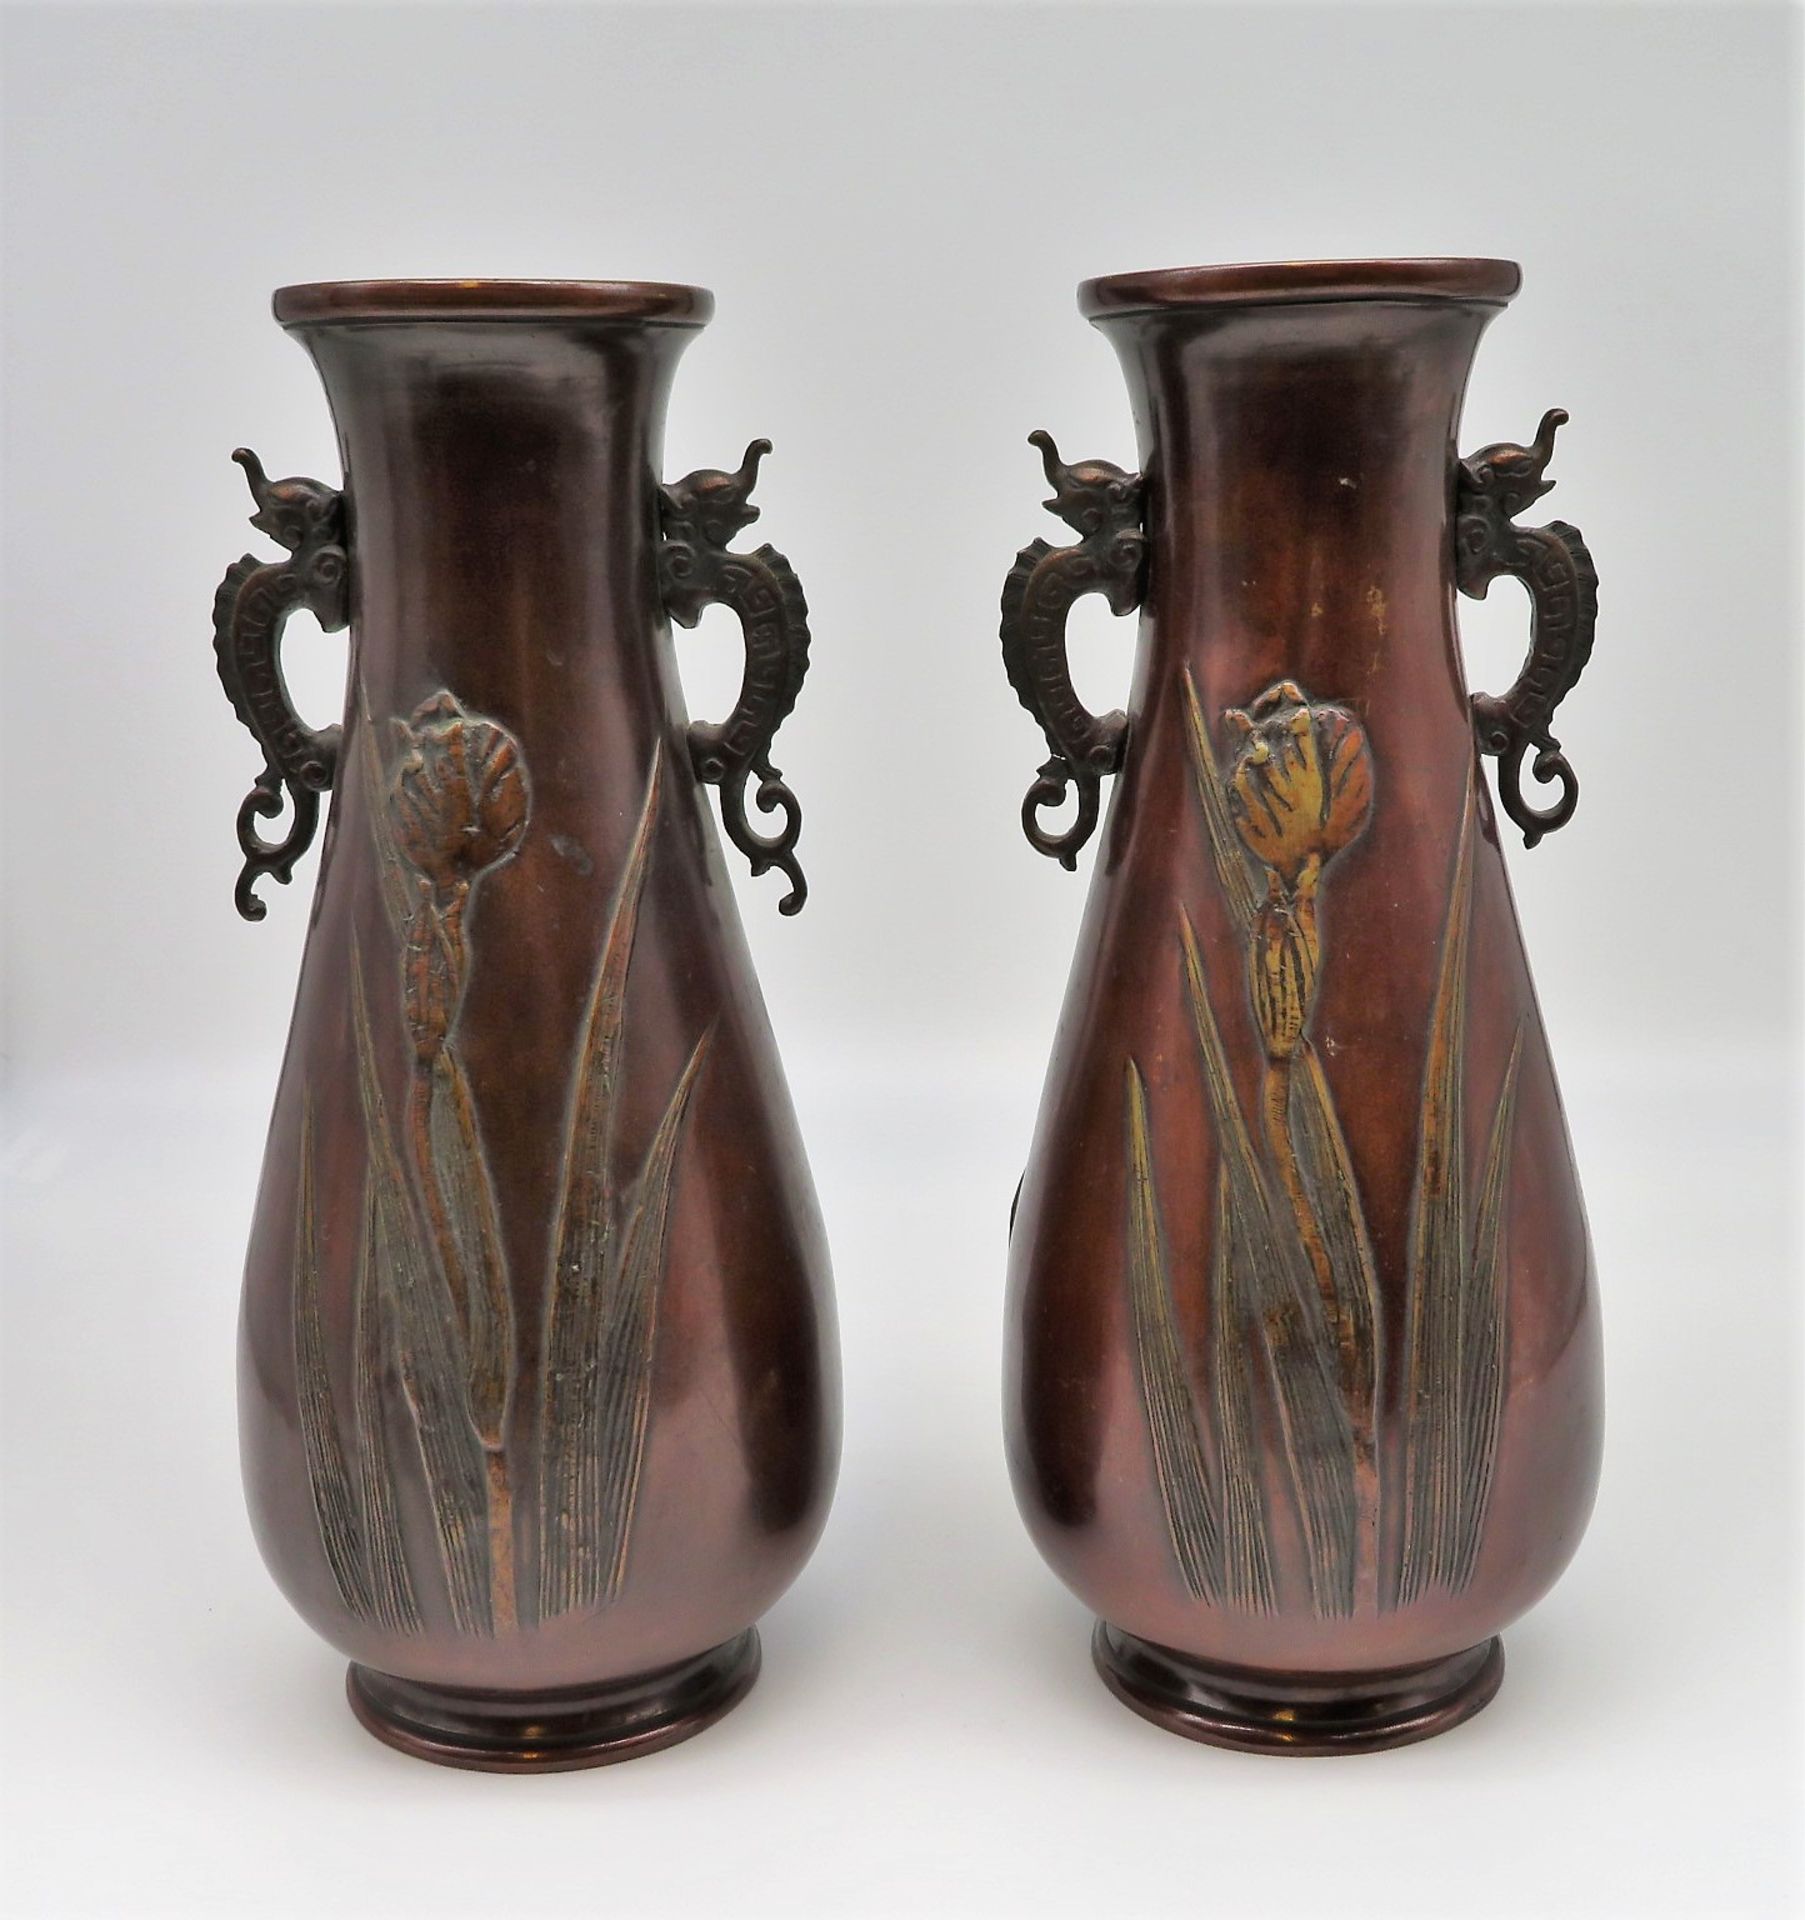 2 Vasen, Japan, um 1900, Bronze patiniert, h 31 cm, d 14 cm. - Image 2 of 3